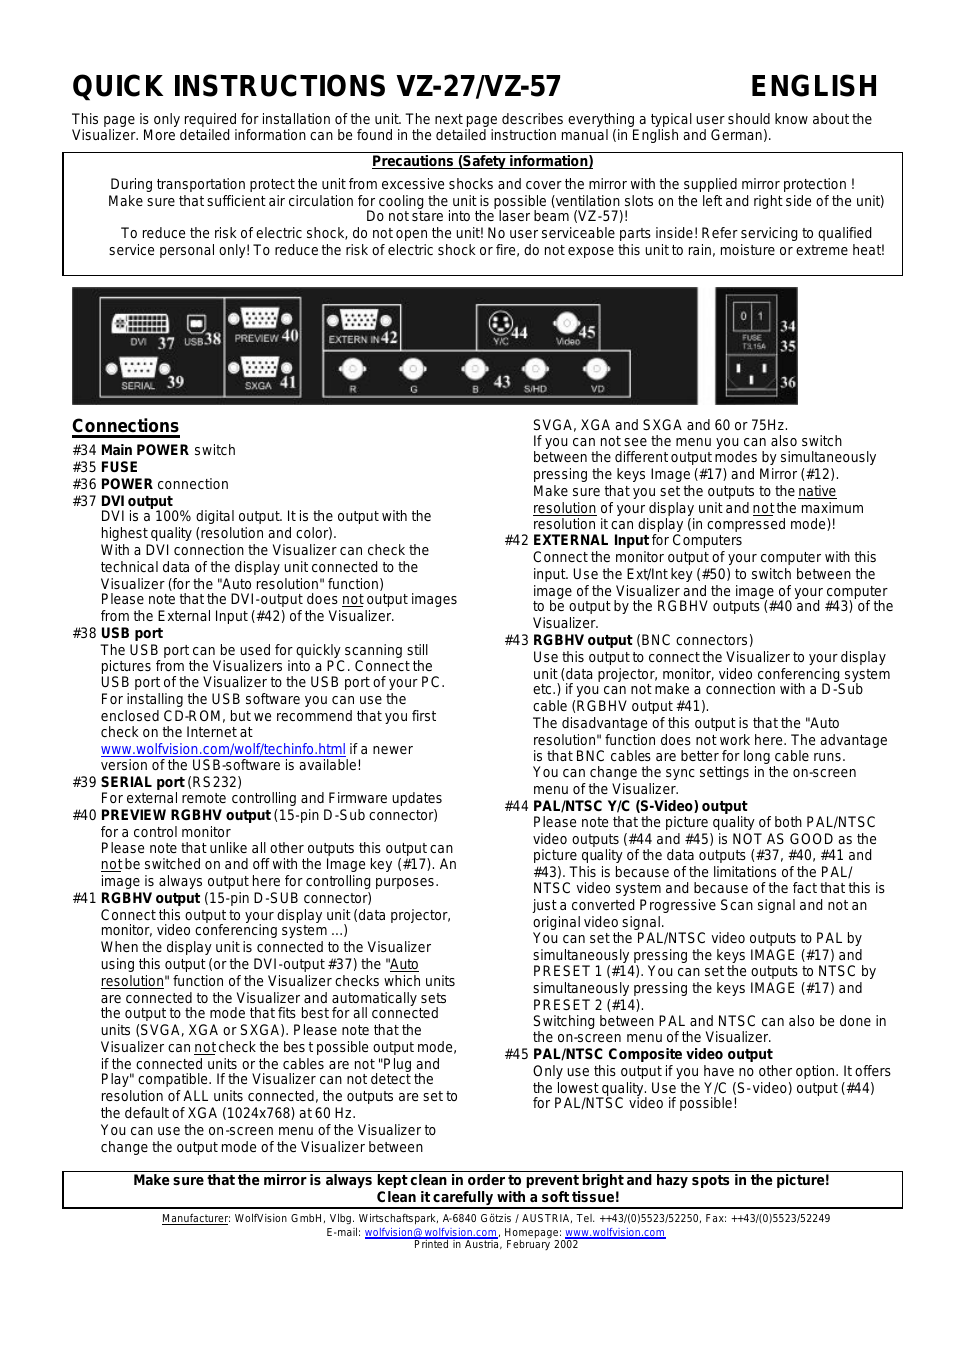 VZ-27 Short User Manual